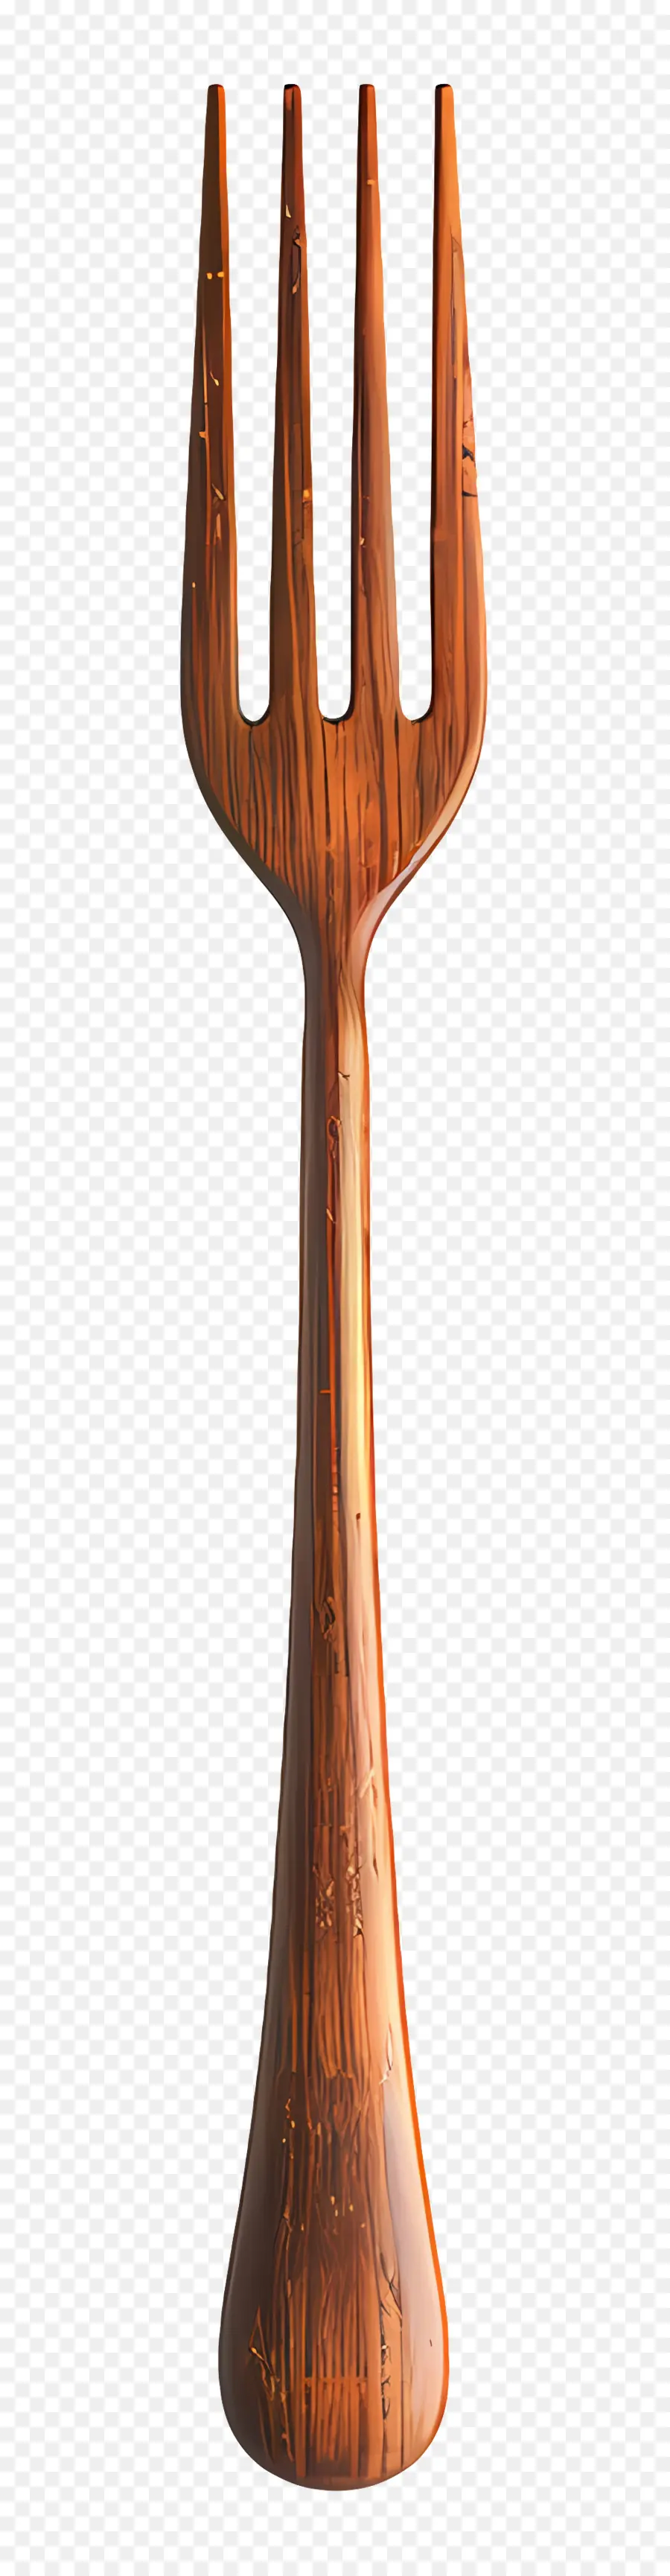 Gabel Holz Armband Geschnitzte Spikes poliertes Holz kompliziertes Design - Kompliziertes poliertes Holztuch mit geschnitzten Spikes